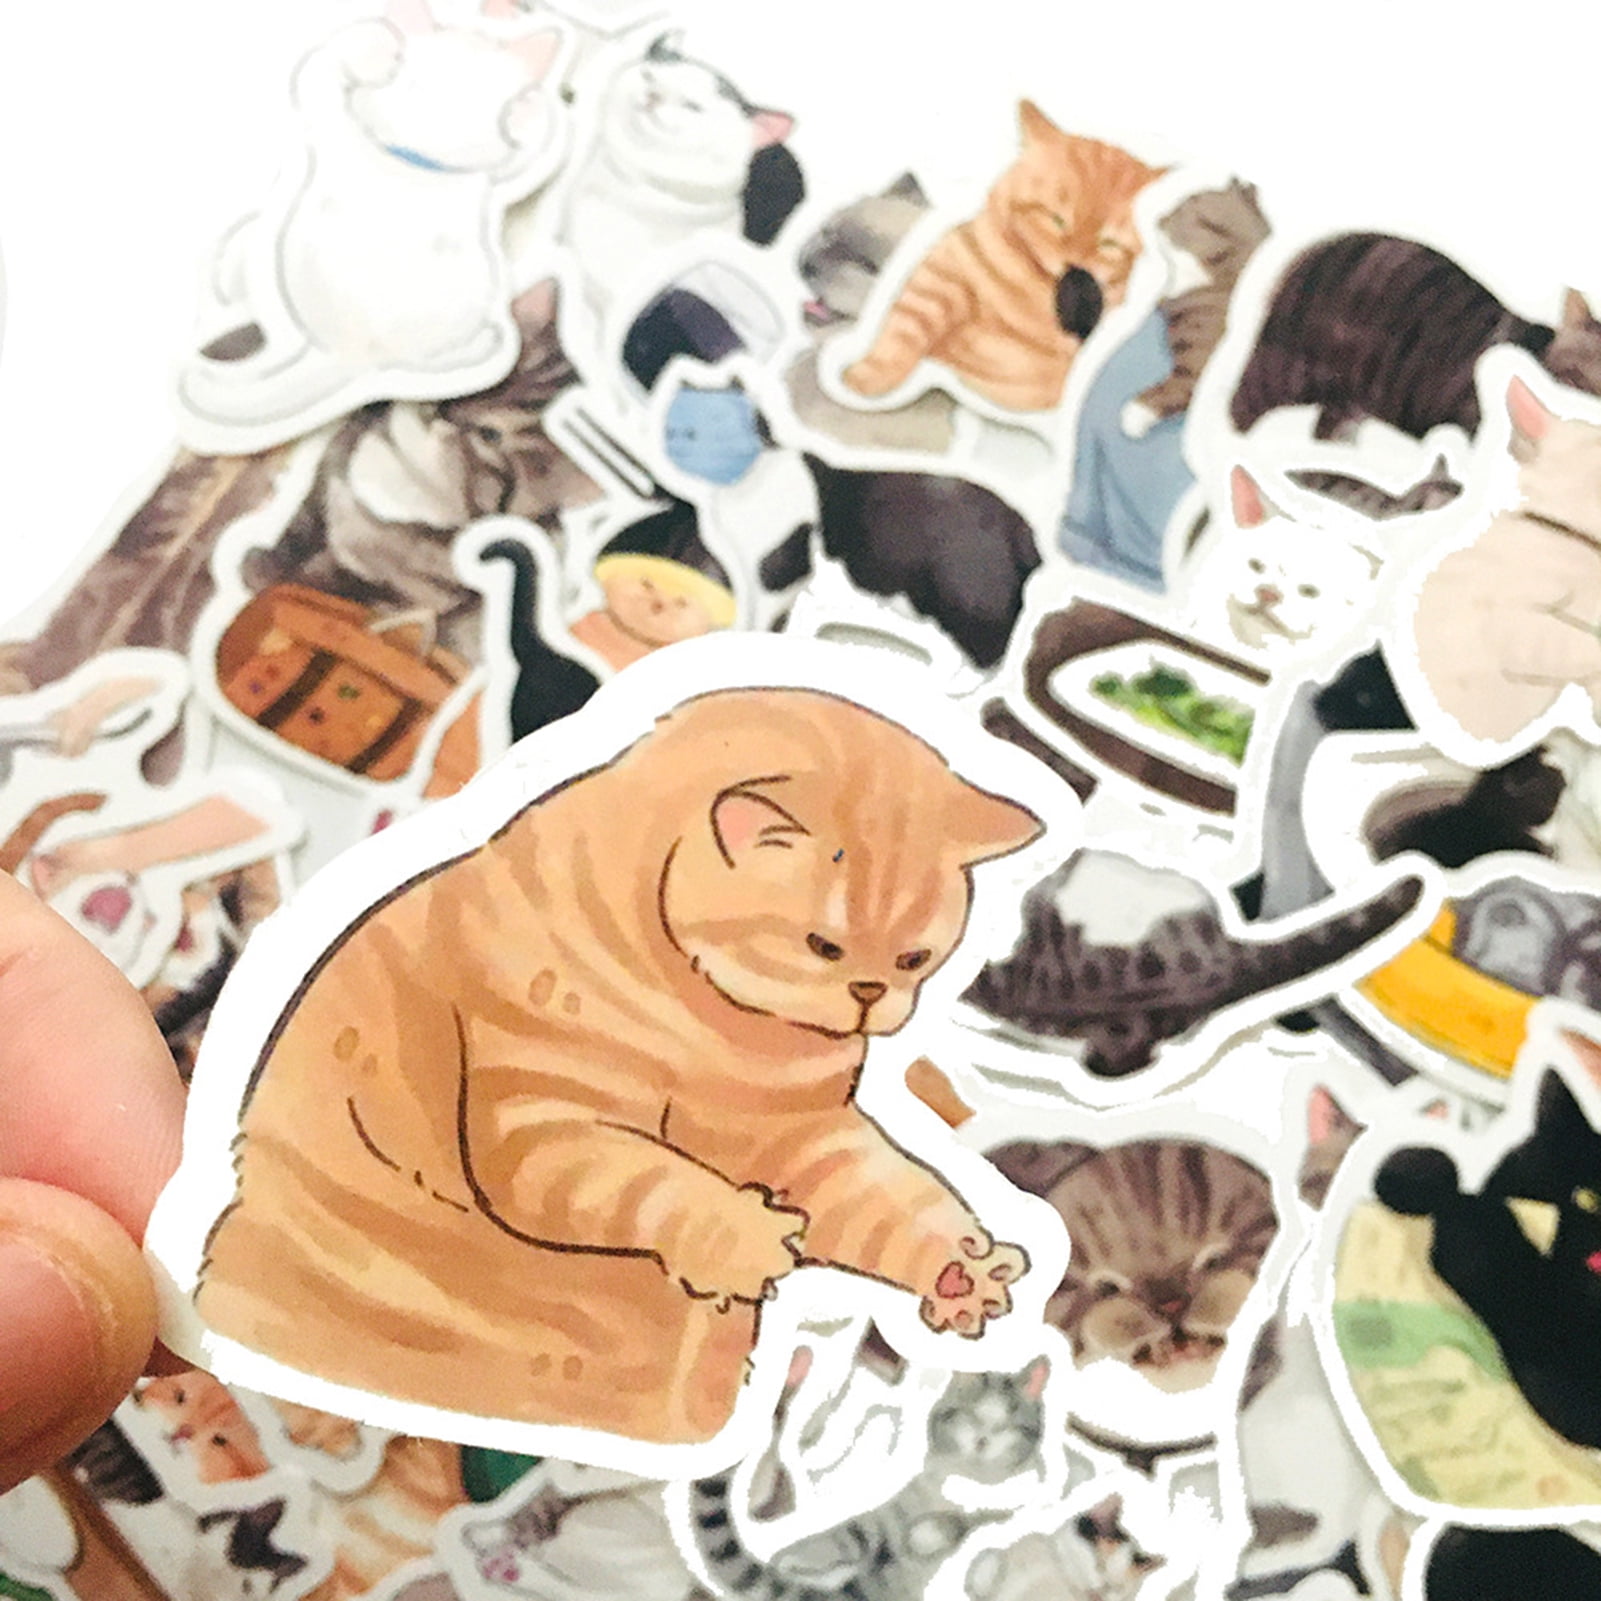 Stickers Laptop Cat, Cartoon Cute Stickers Cats